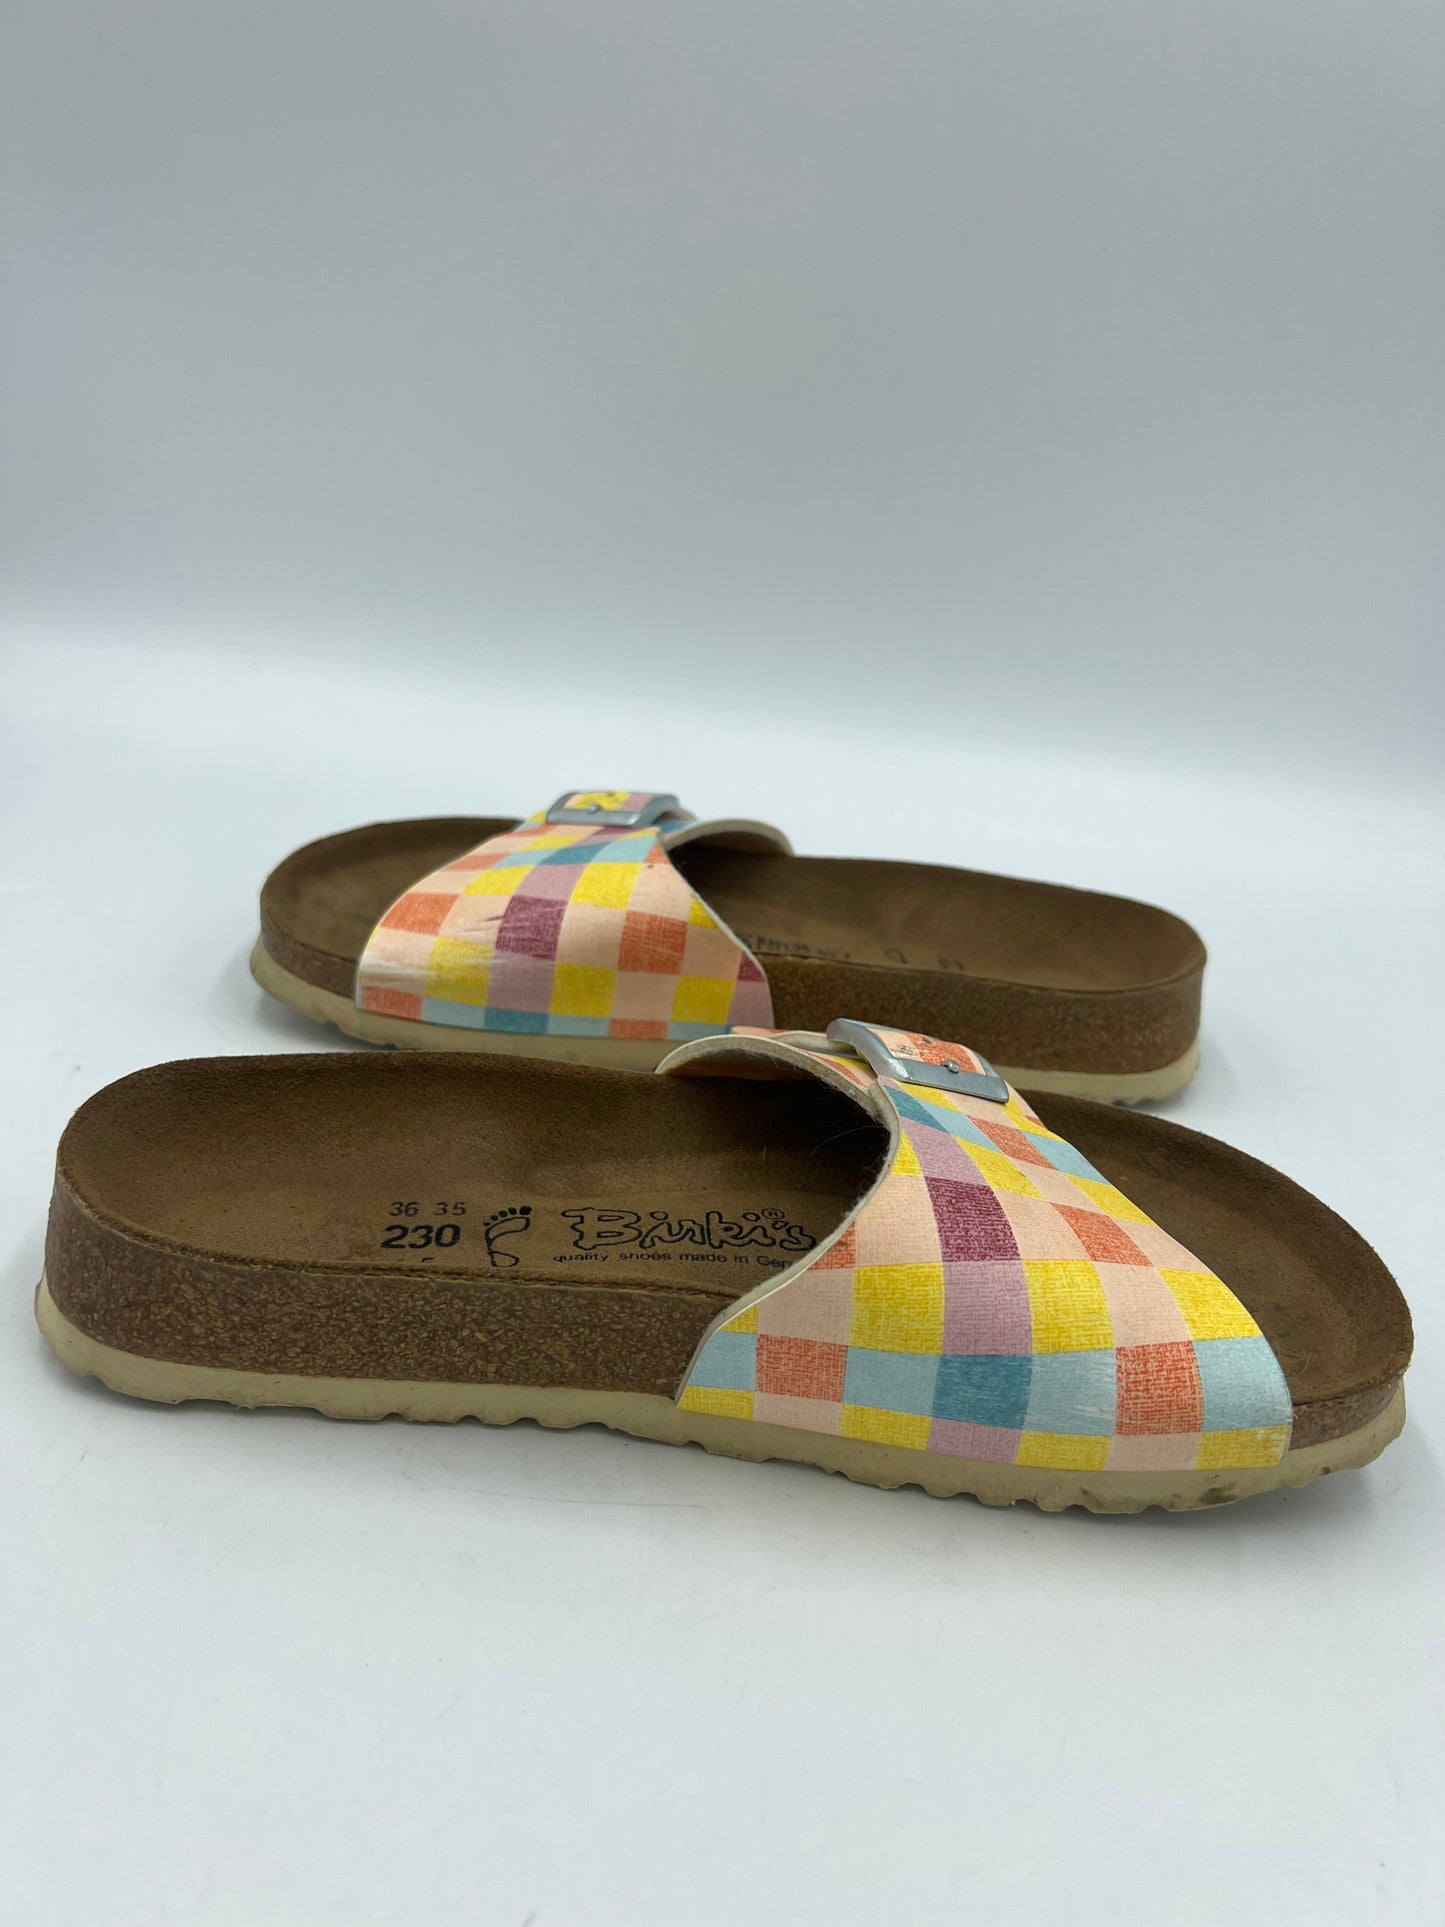 Multi-colored Shoes Designer Birkenstock, Size 6